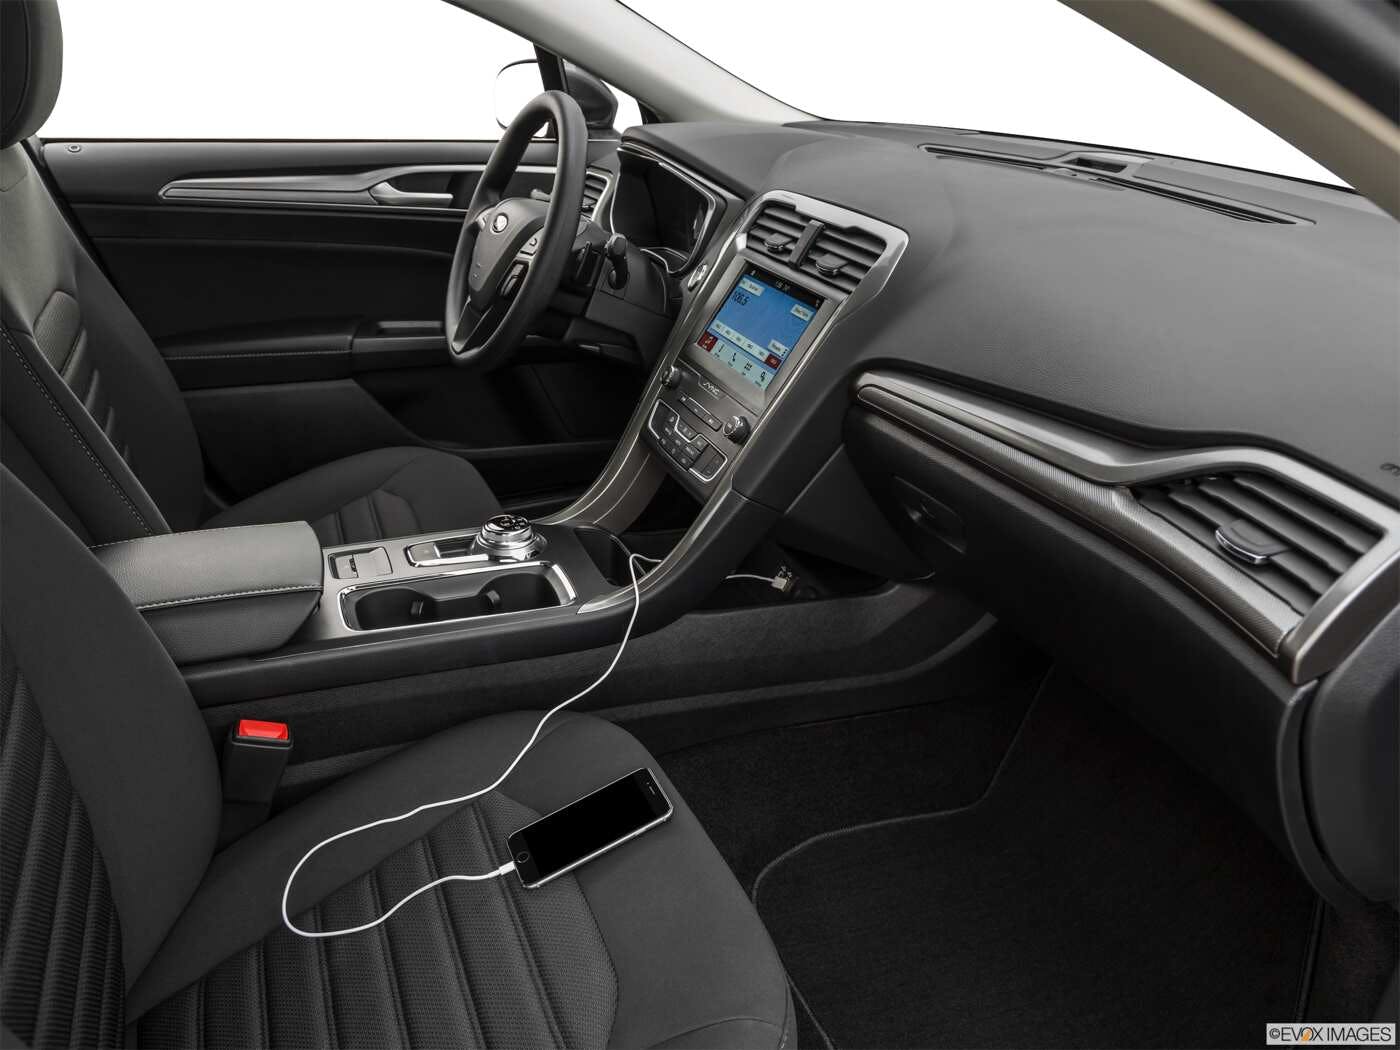 2020 Ford Fusion Review | Pricing, Trims & Photos - TrueCar